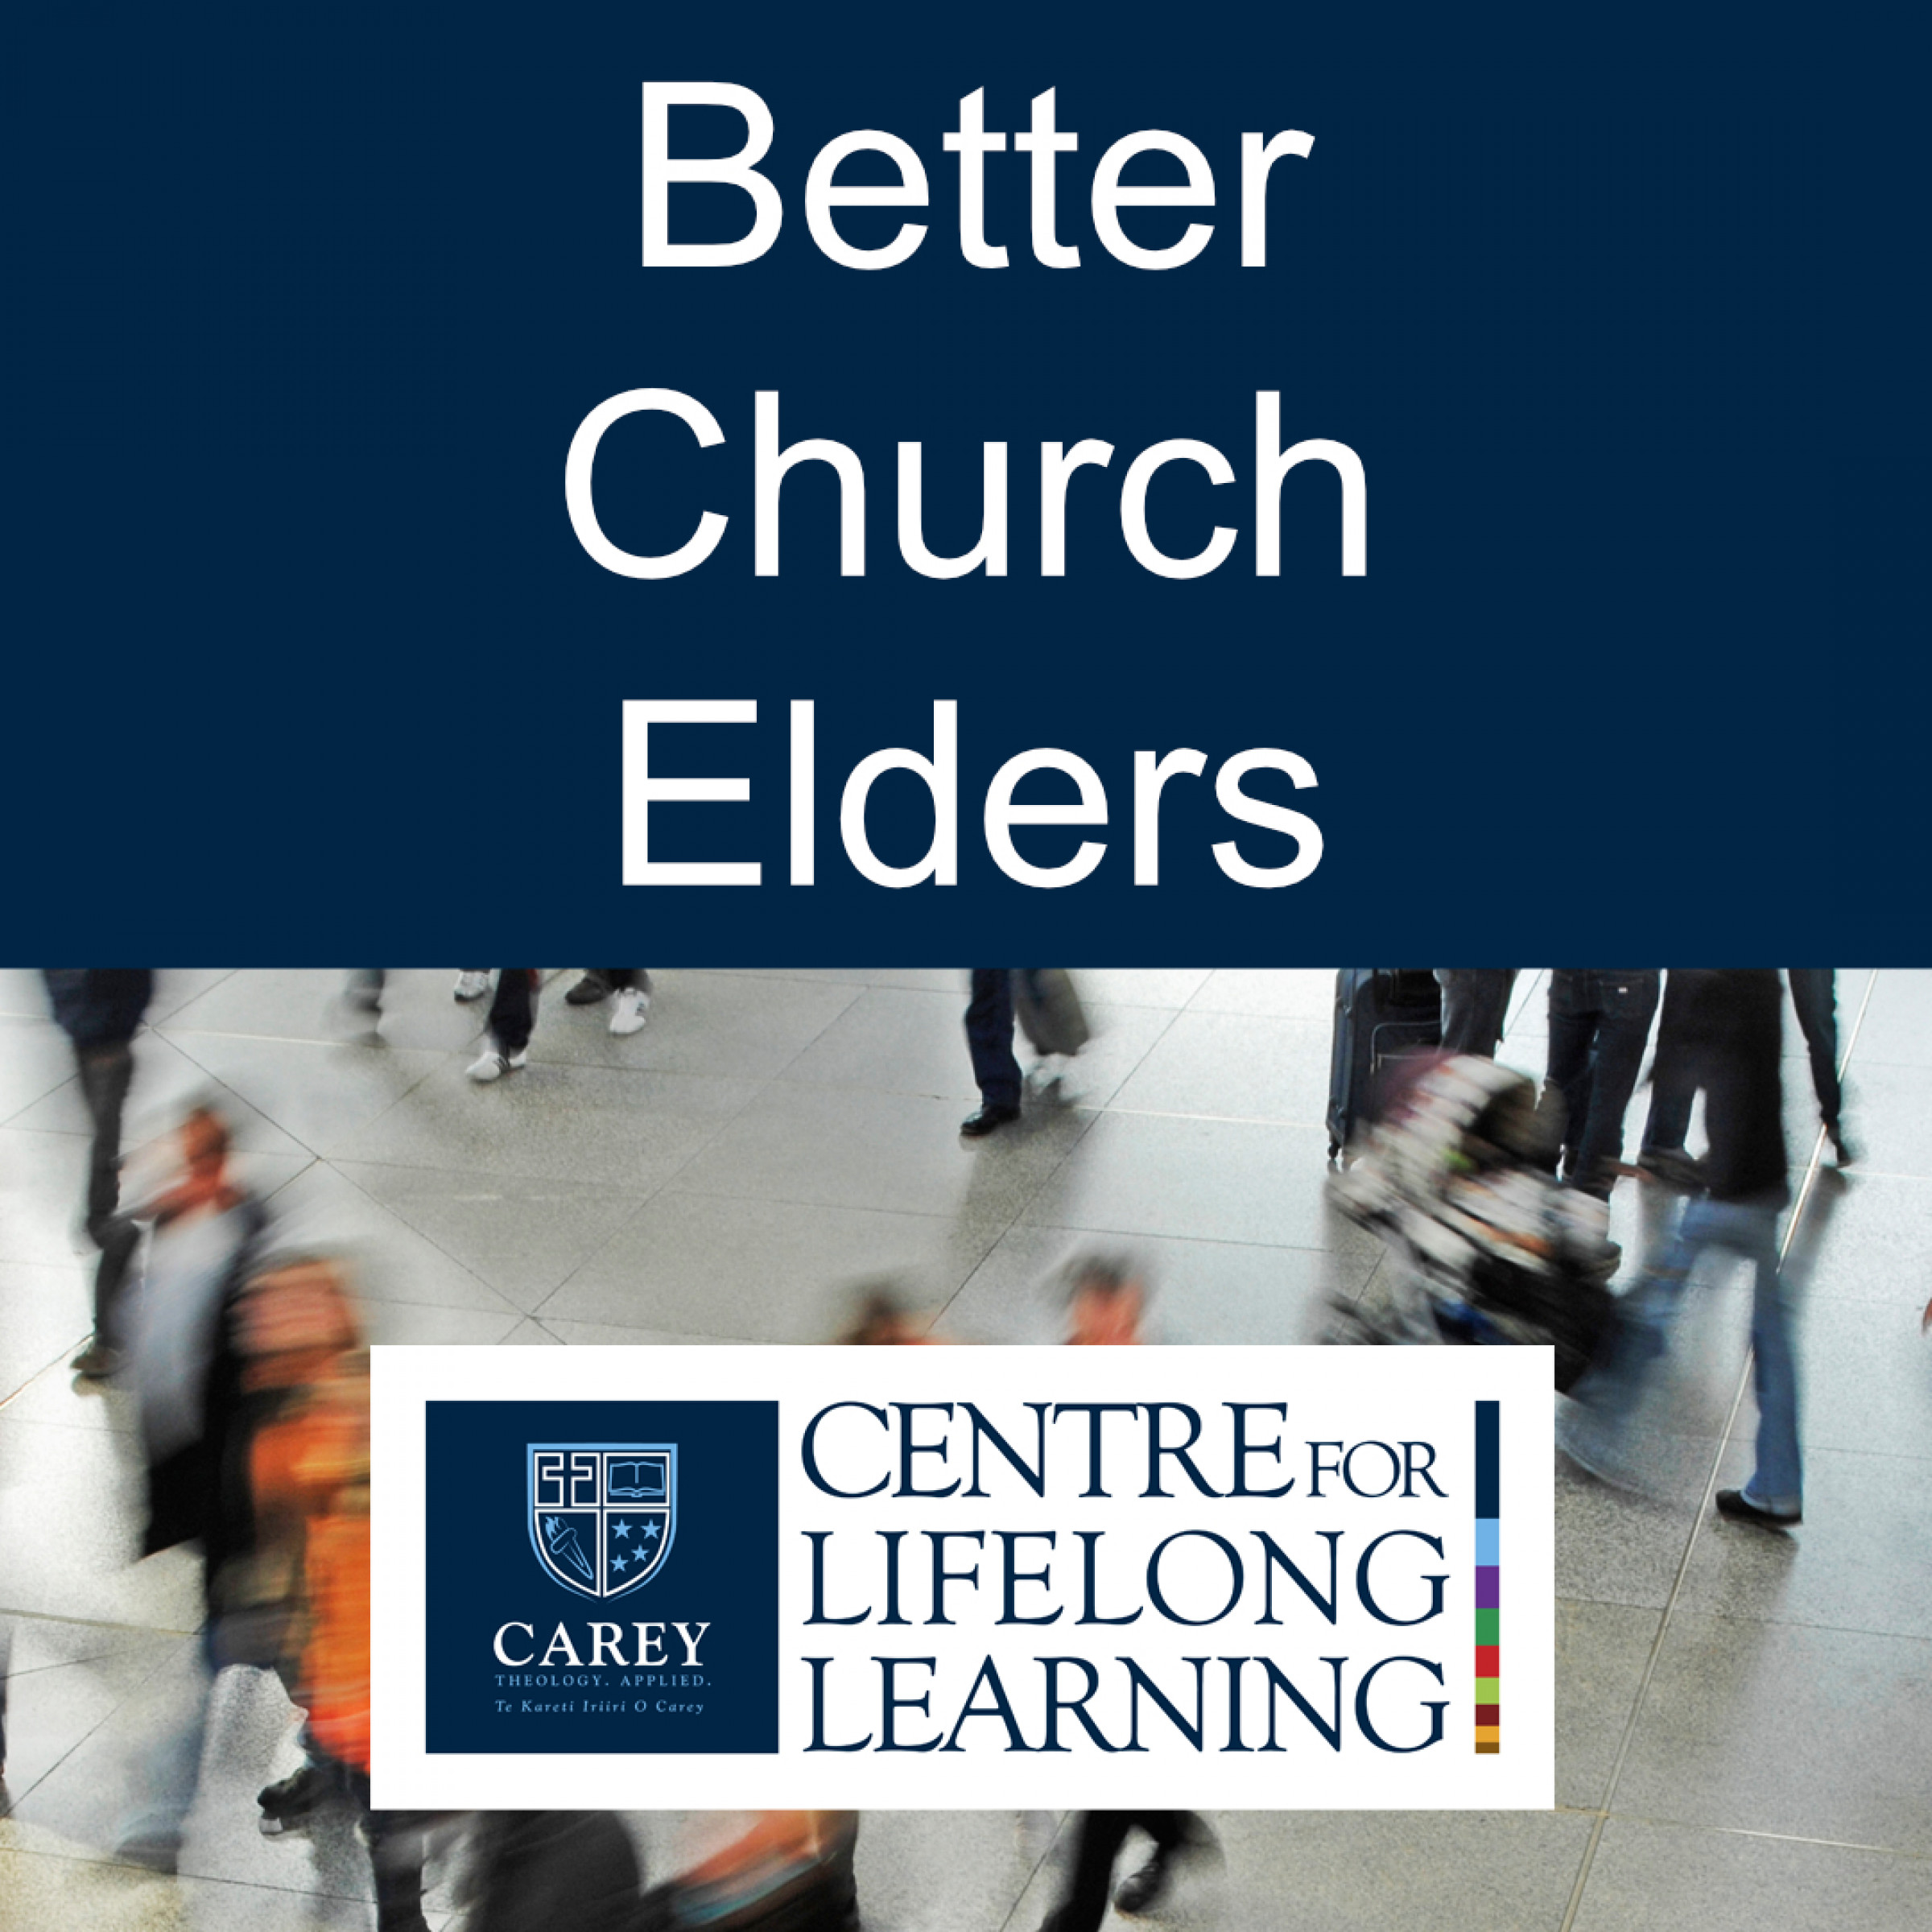 Better Church Elders Image